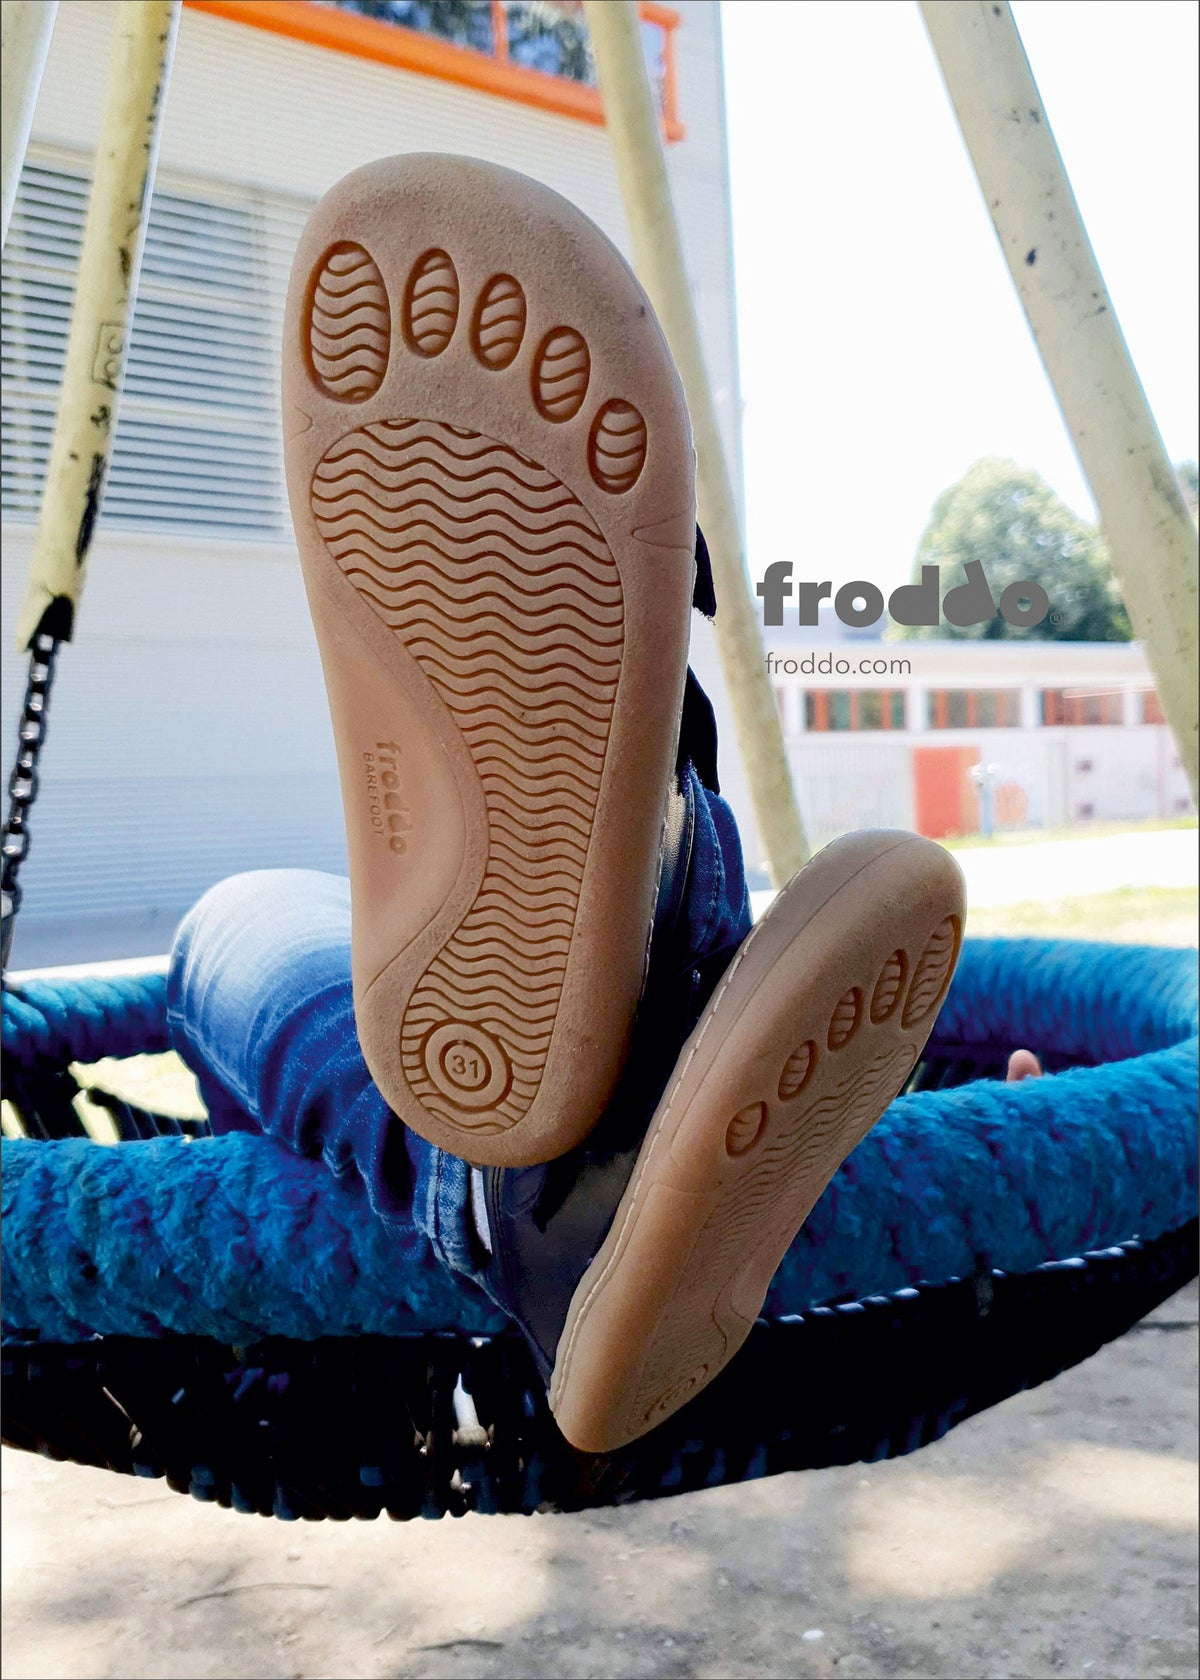 Children's barefoot sneakers - dark blue